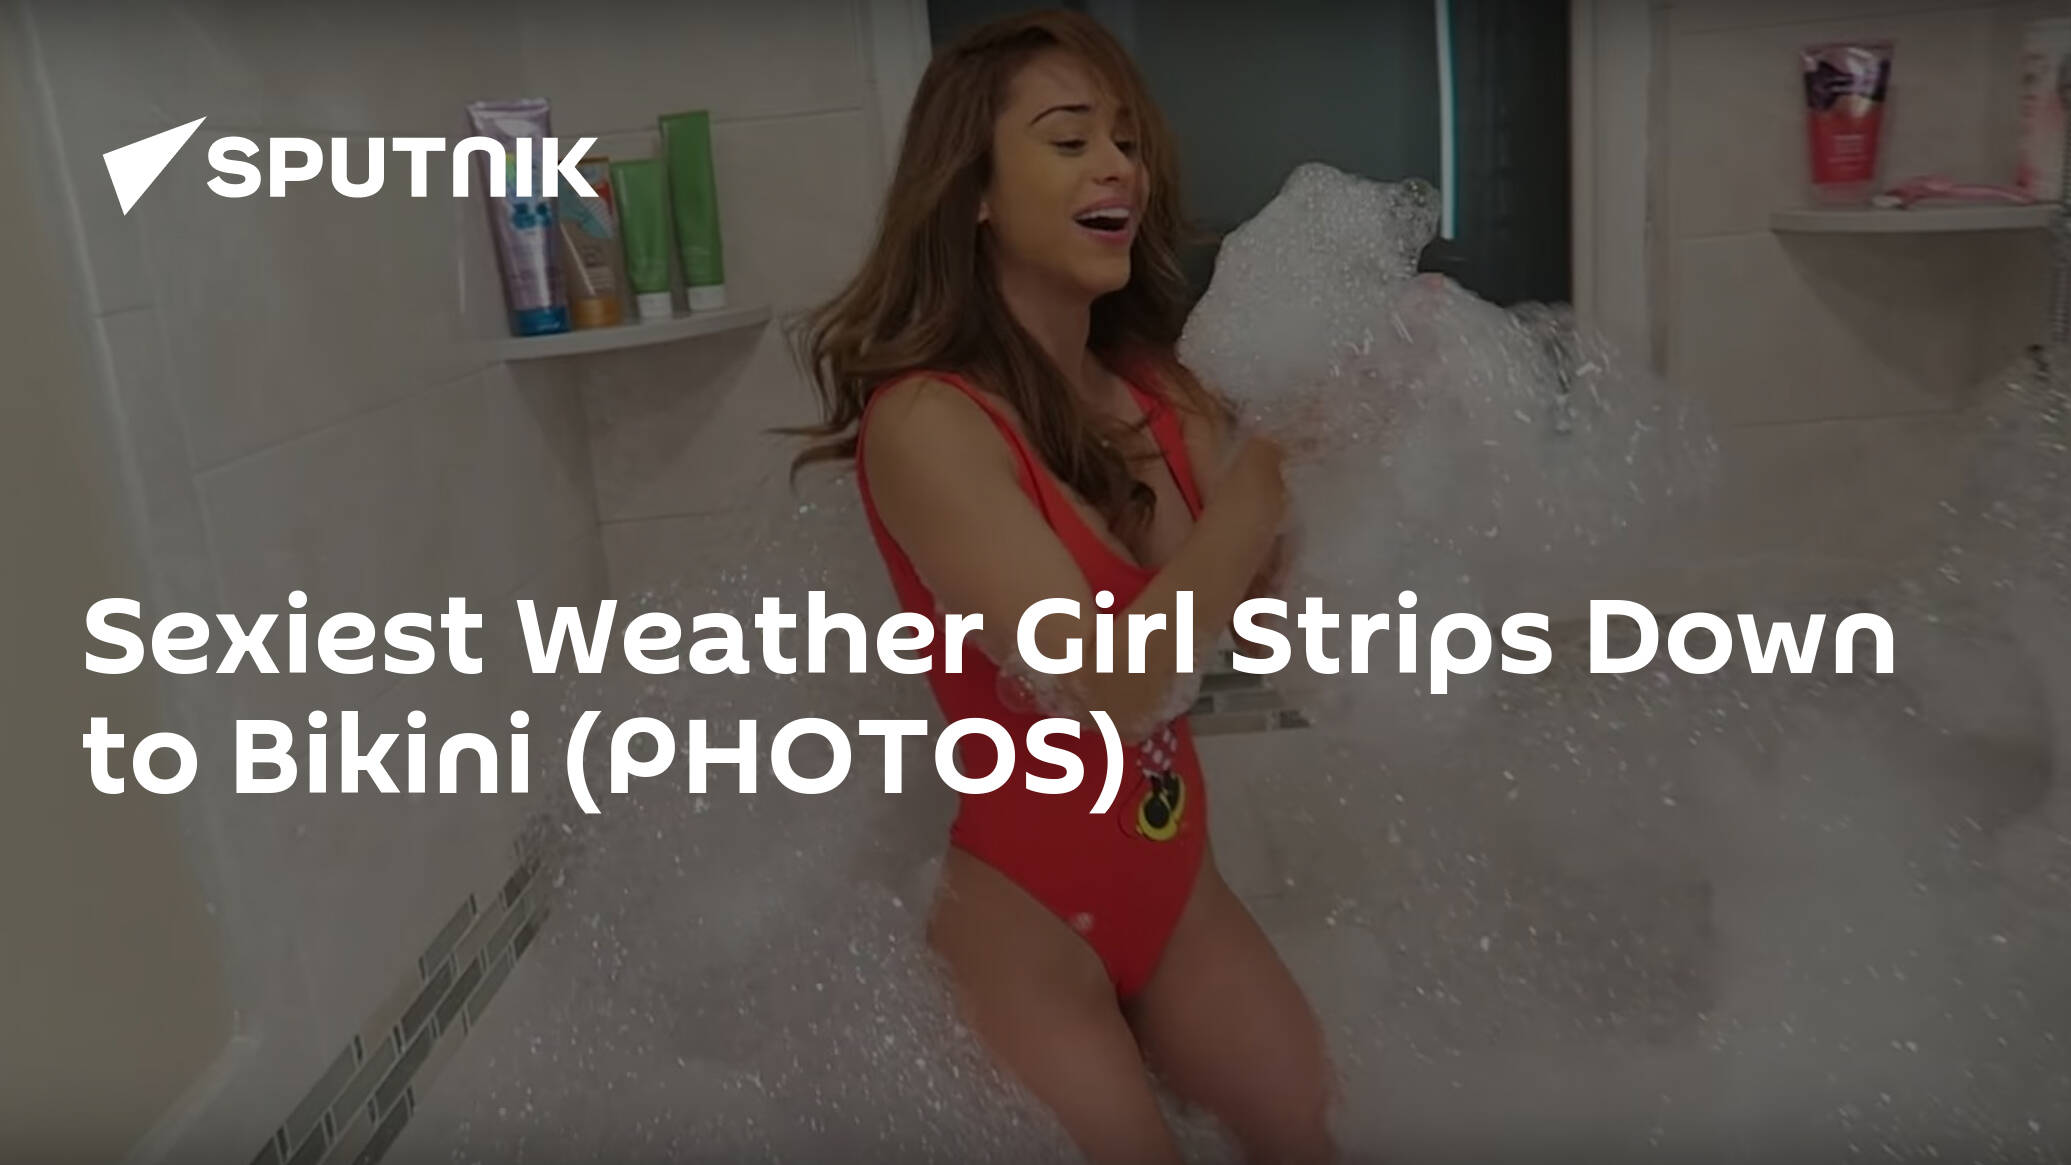 alexis nicole aloia add photo sexy weather girl strips